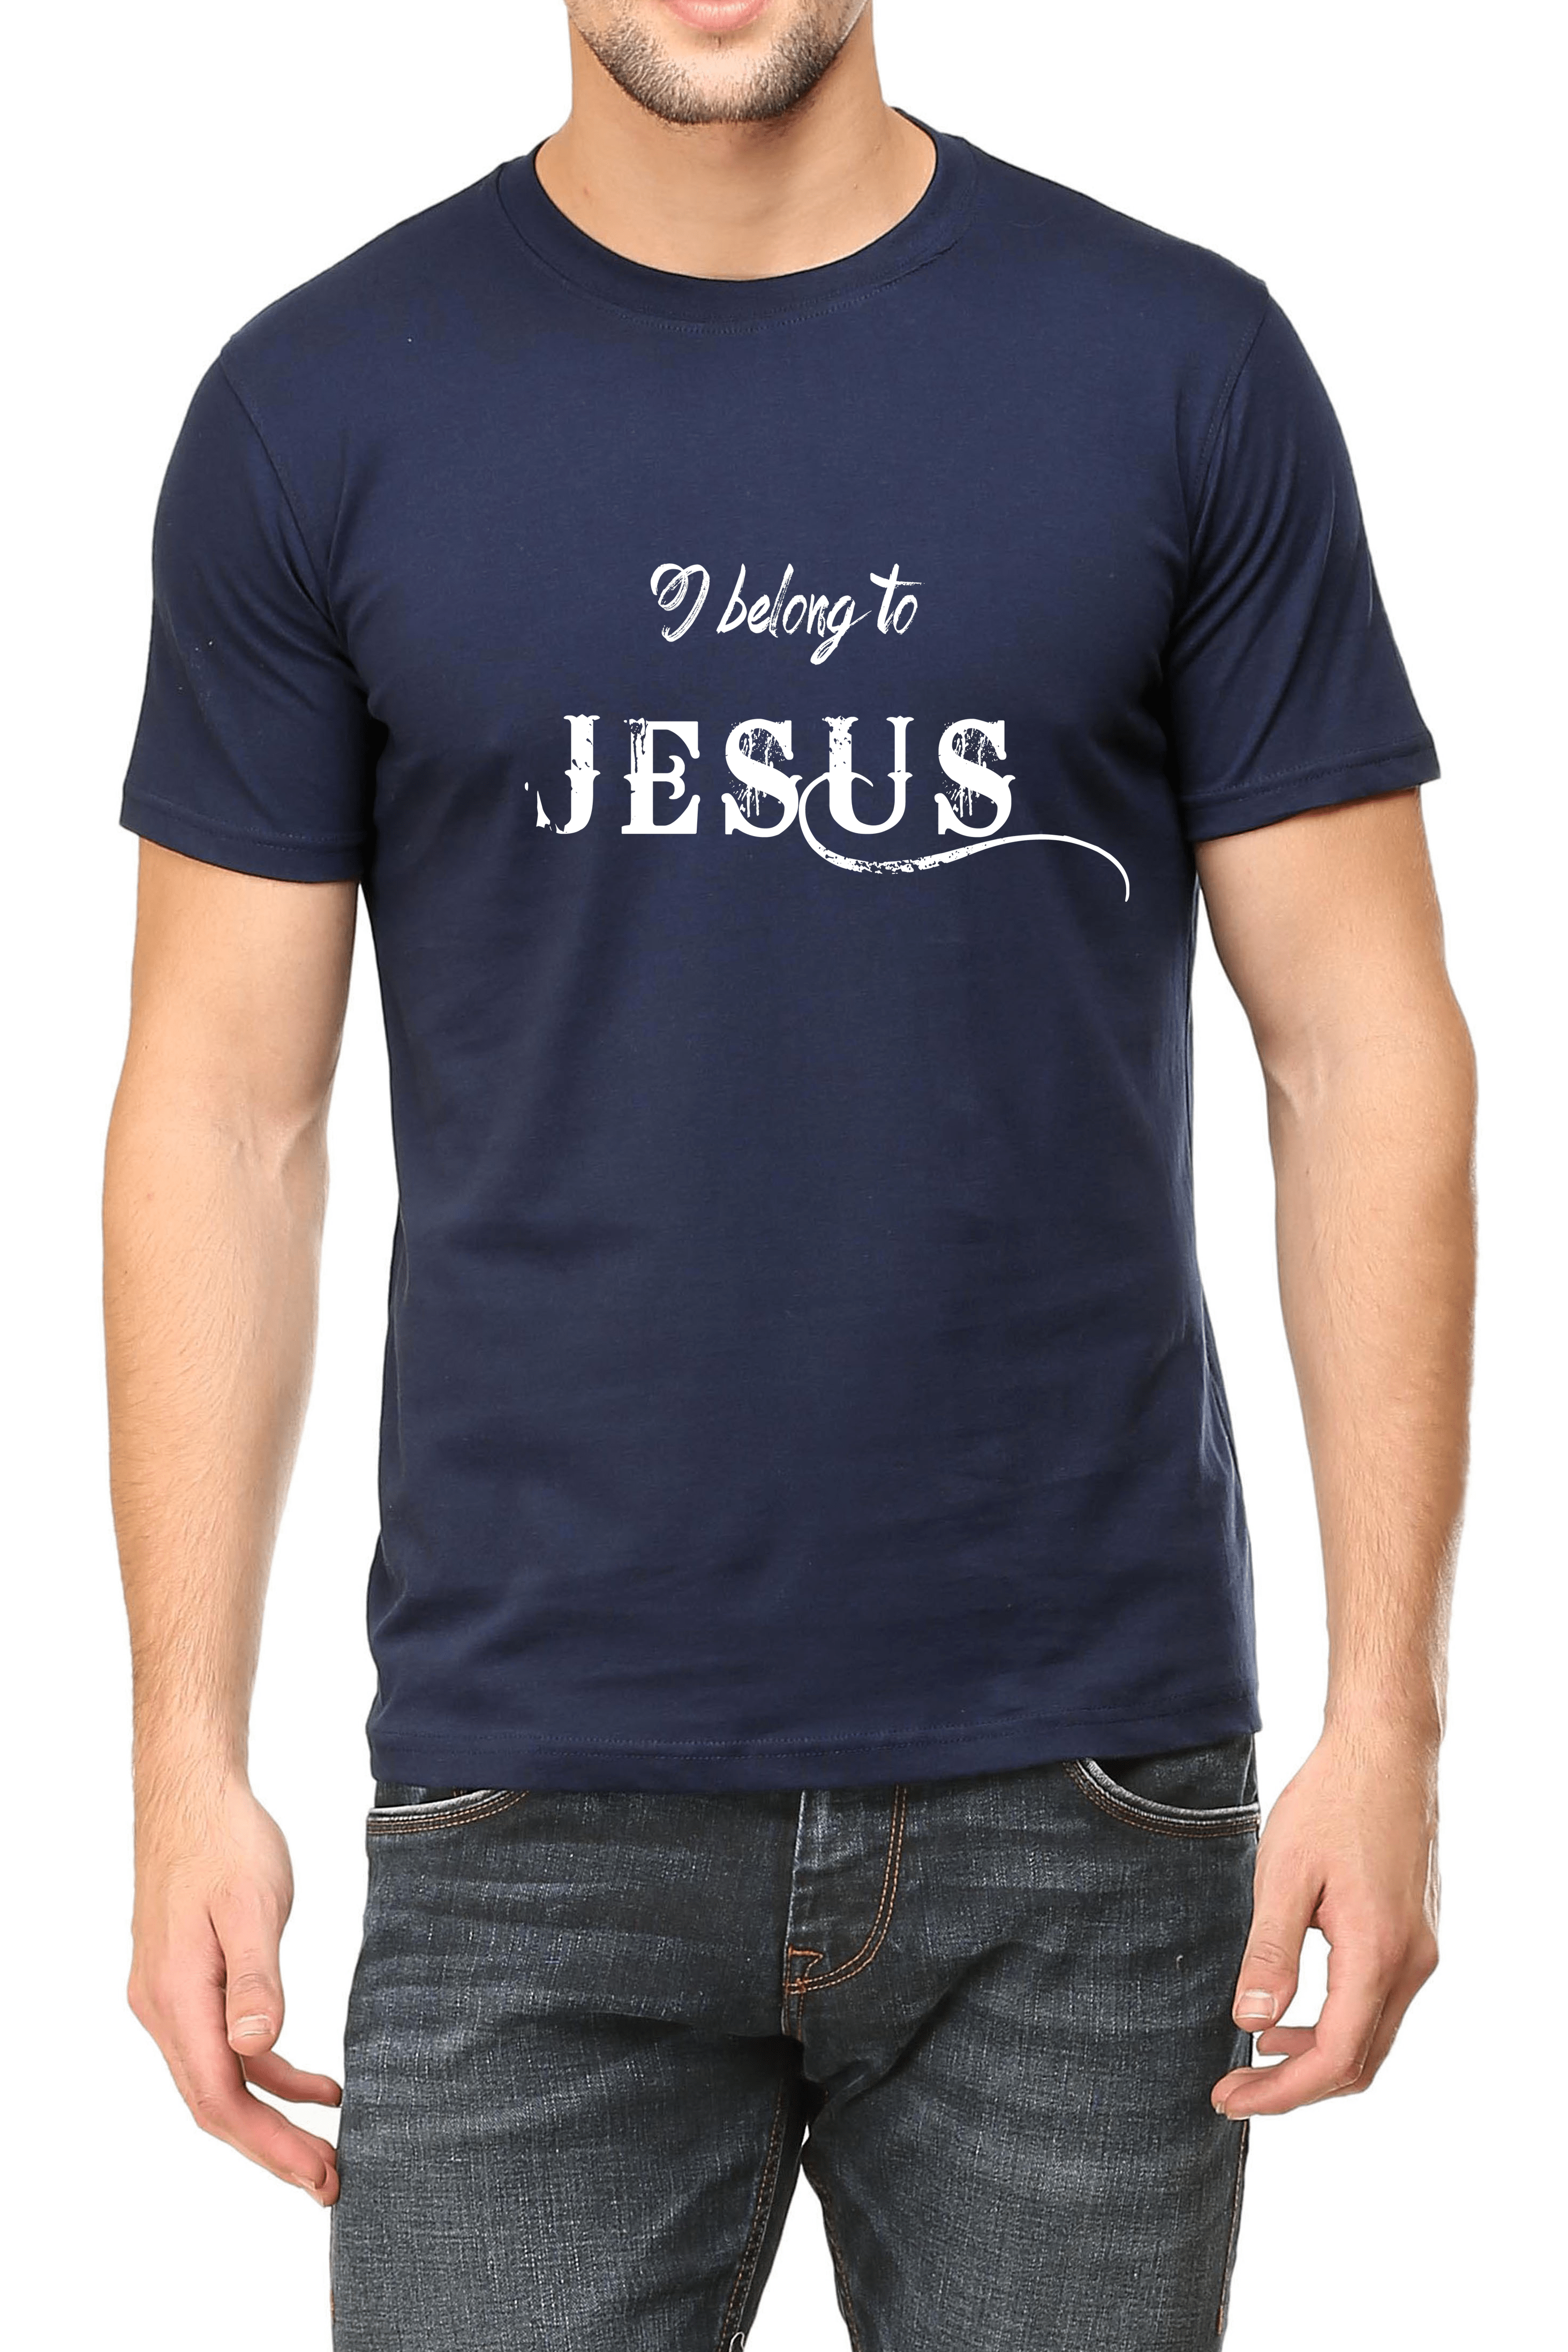 Living Words Men Round Neck T Shirt S / Navy Blue I belong to Jesus - Christian T-Shirt